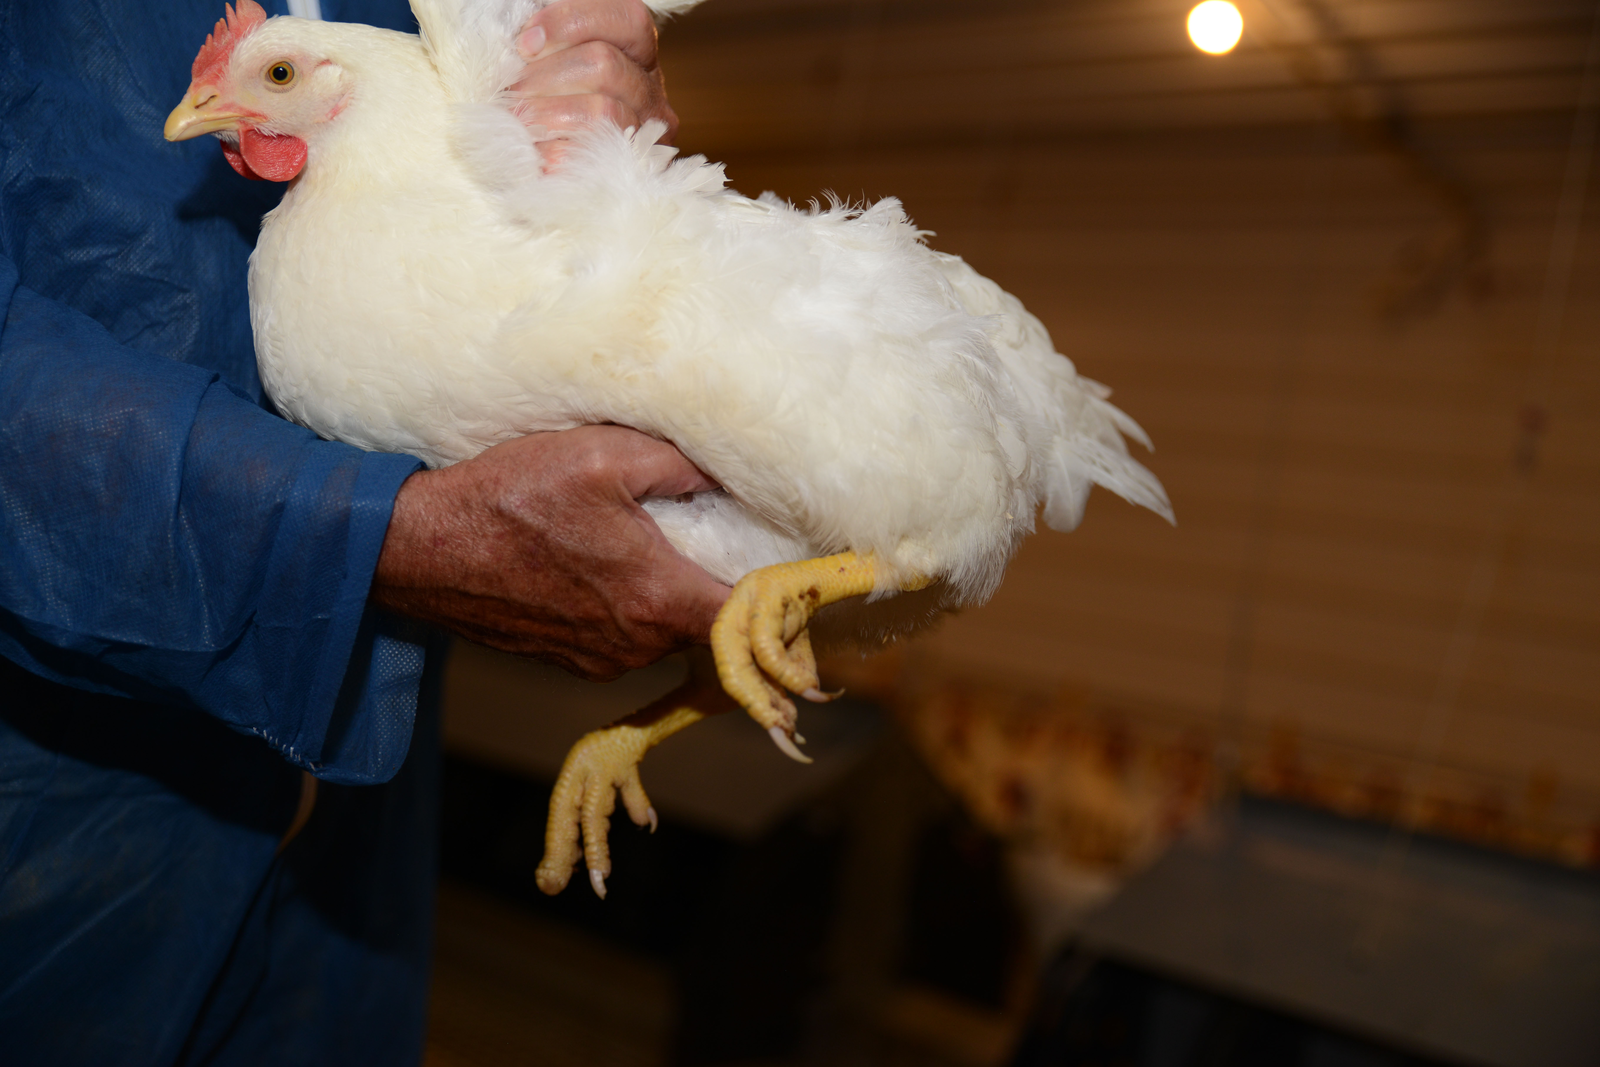 Fleshing important in optimal broiler breeding - Poultry World